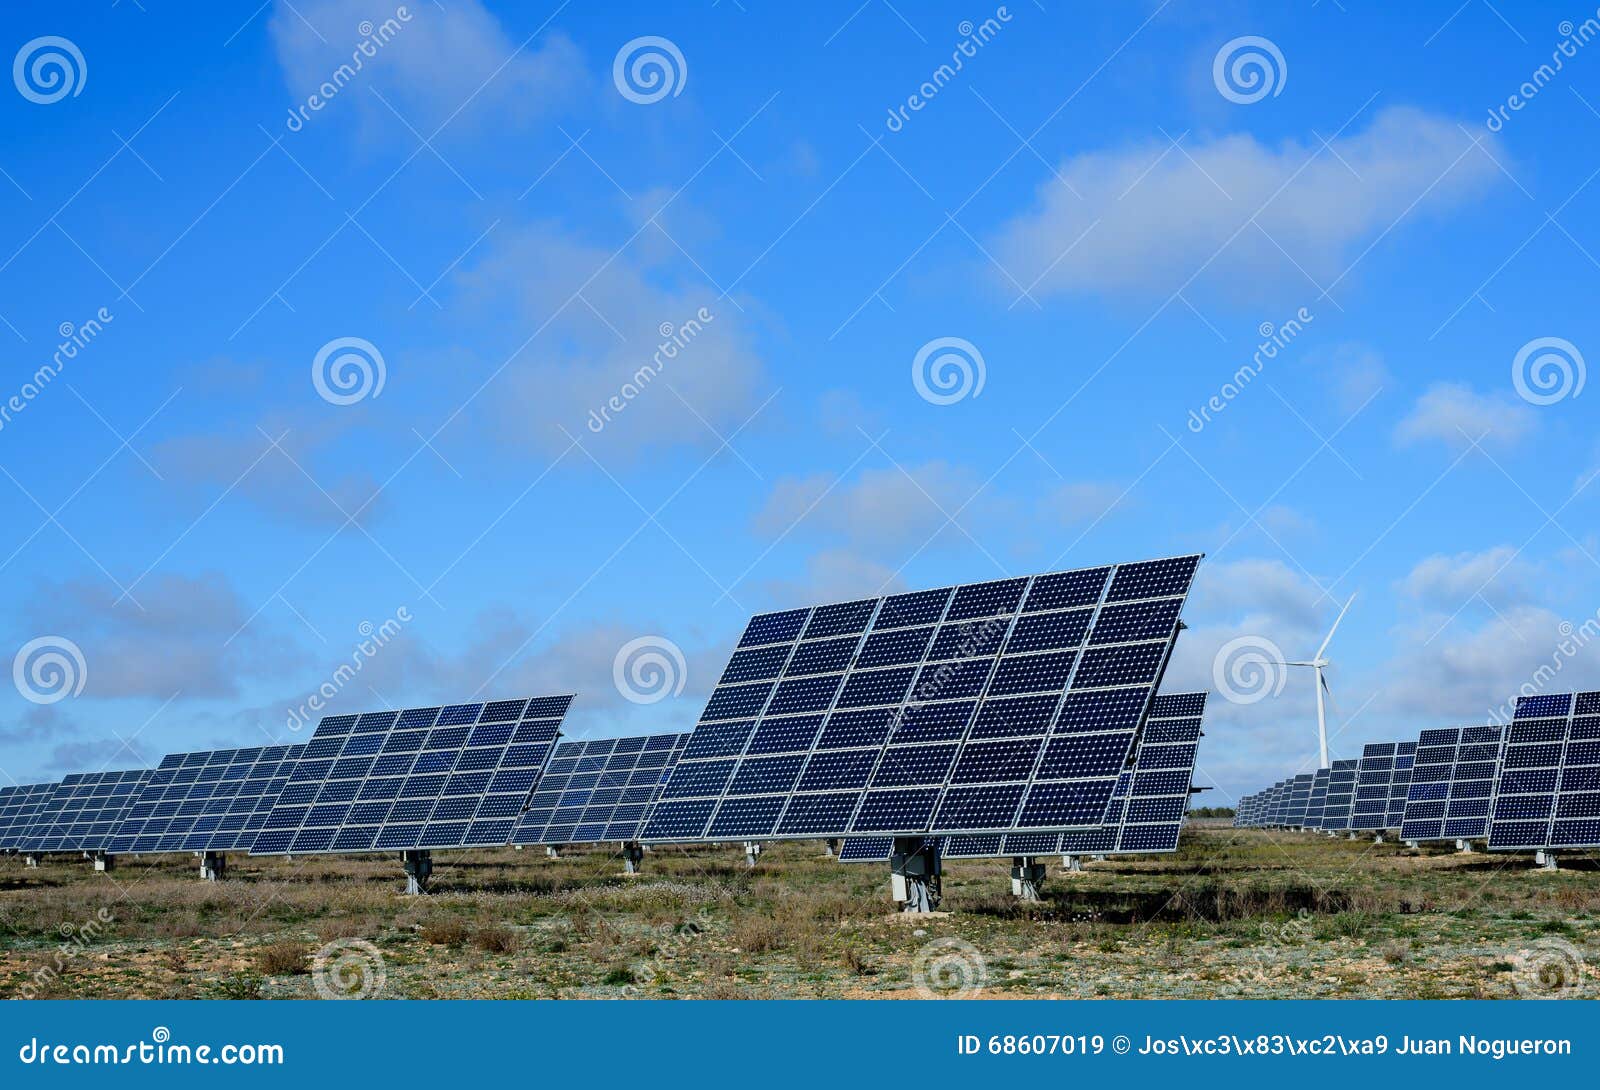 renewable energies at sunset iv